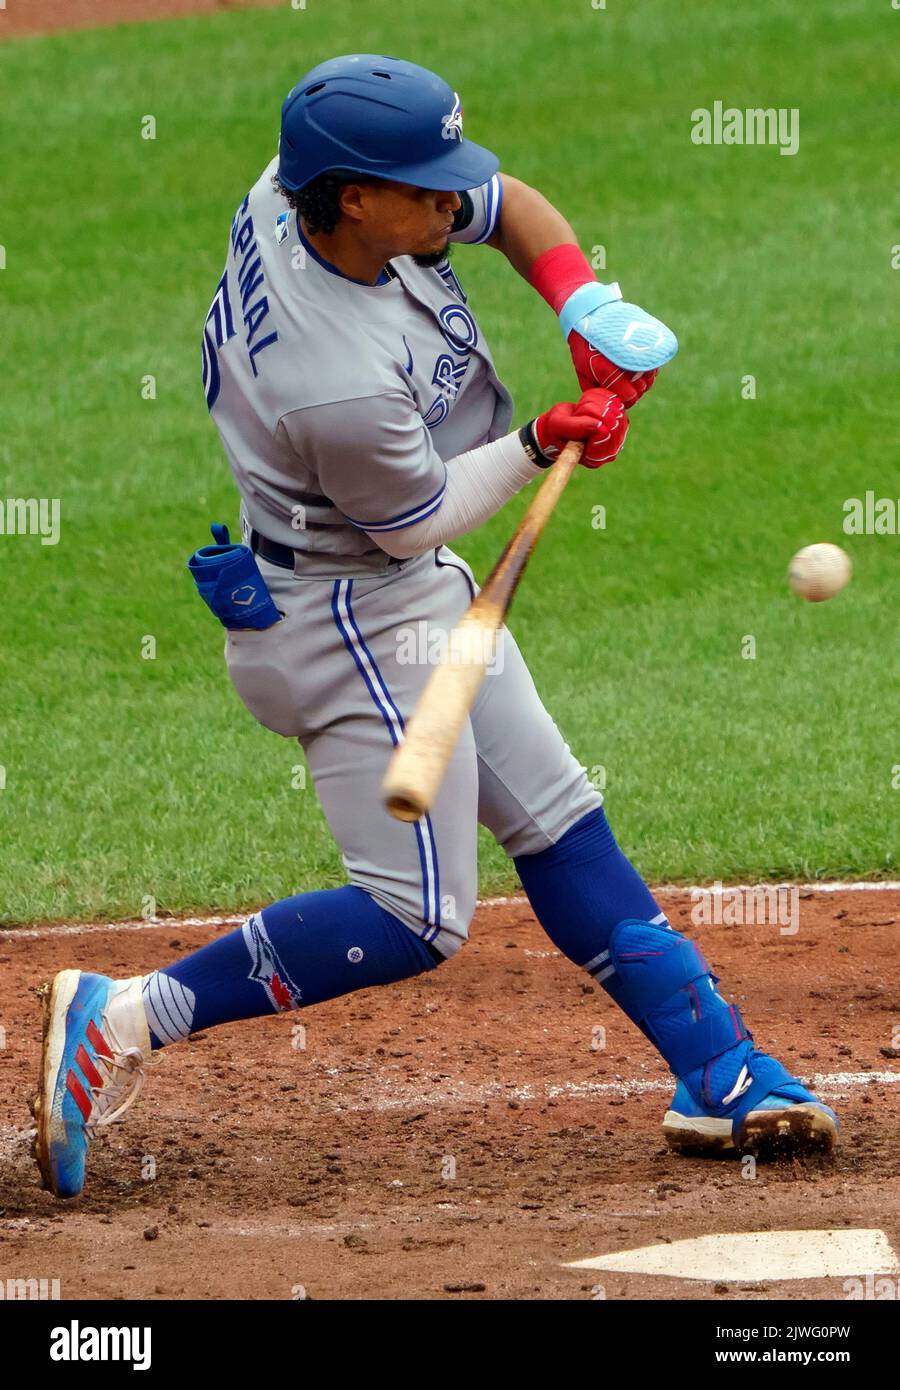 Lourdes Gurriel jr on X: RT @BlueJays: @Cut4 @MLB Flow my Lourdes 🤩   / X